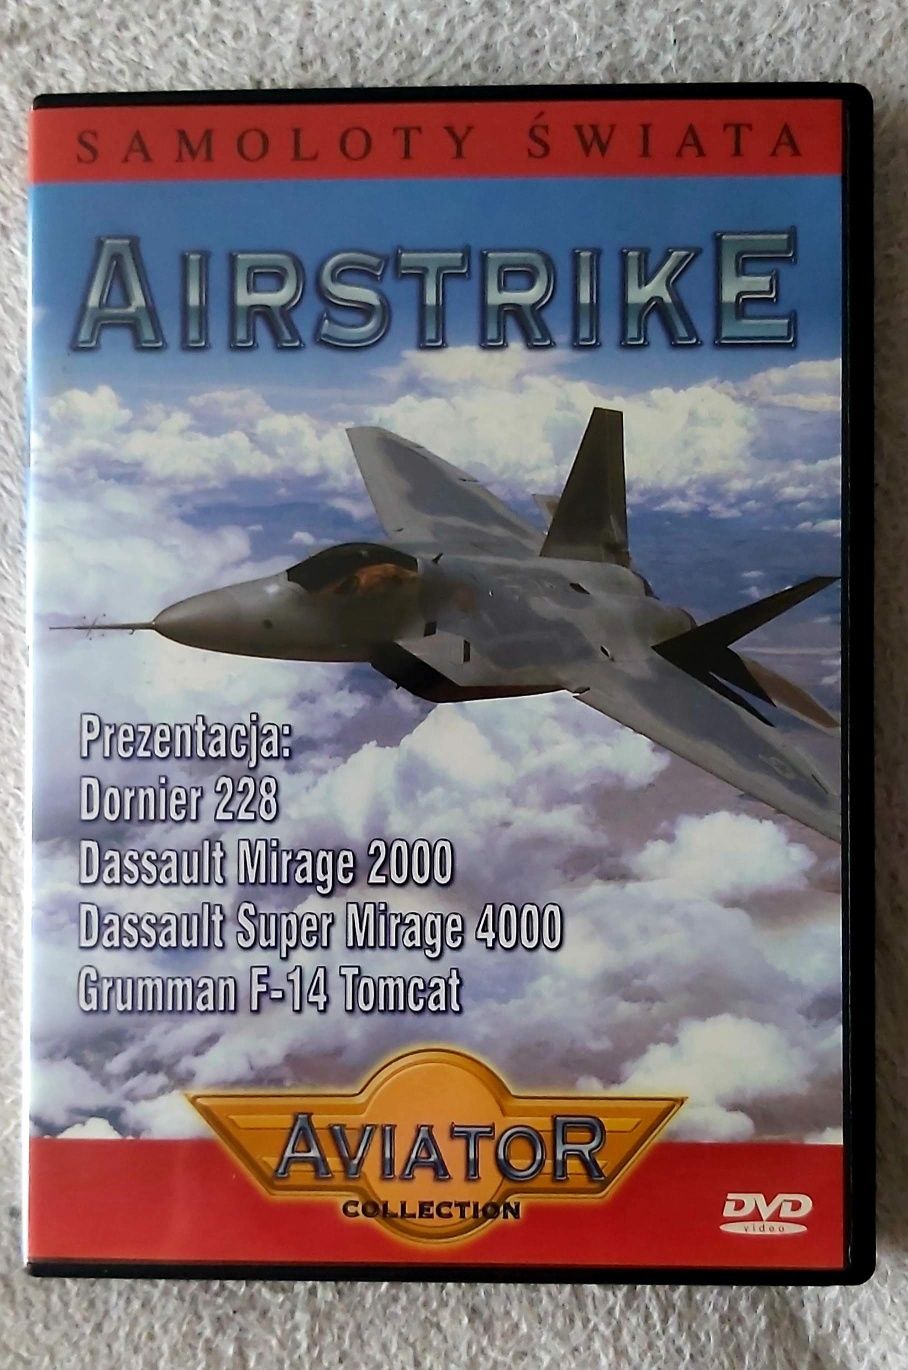 Samoloty świata "Airstrike" na płycie DVD